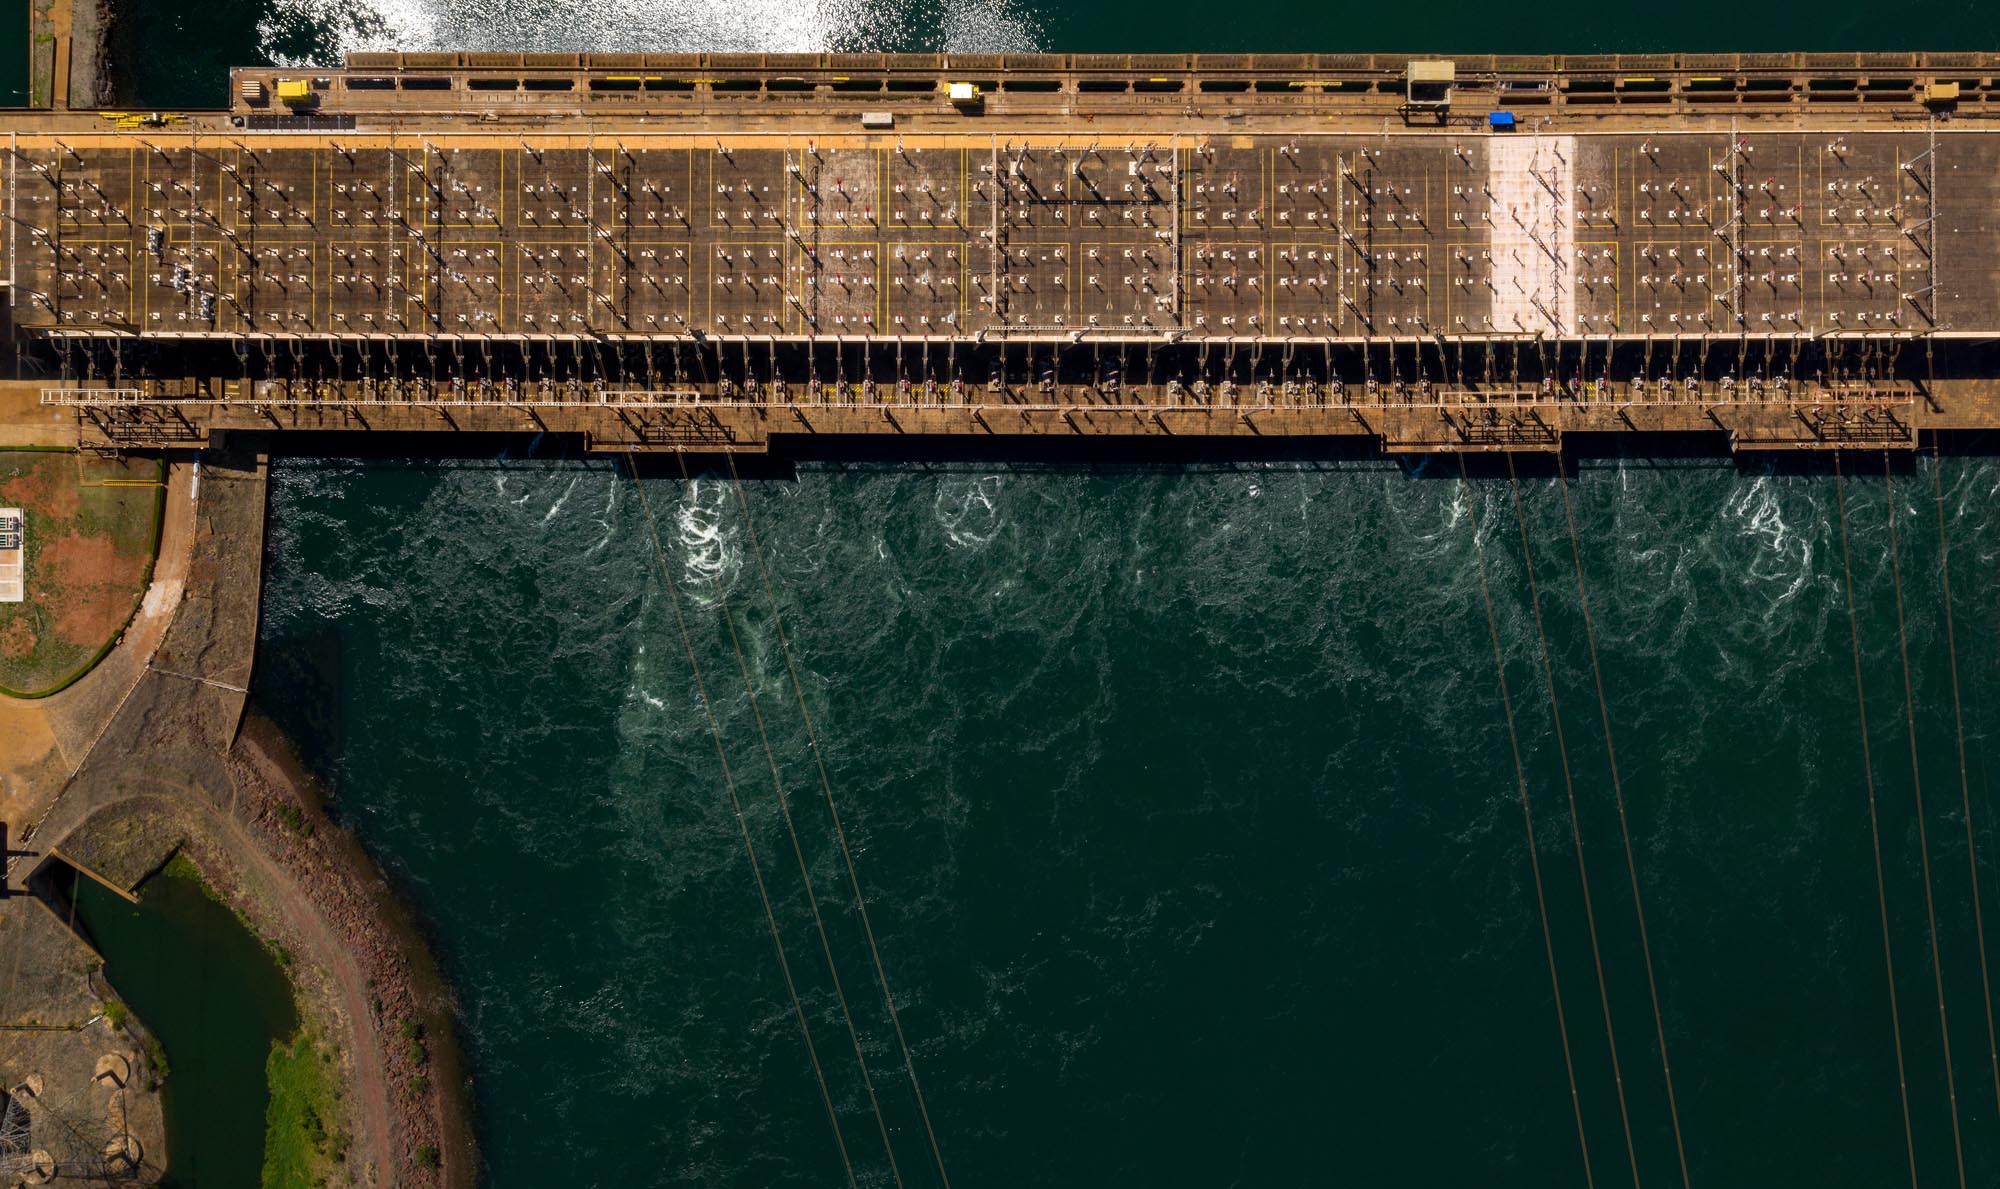 CGT Brasil - Usina Hidrelétrica / Três lagoas